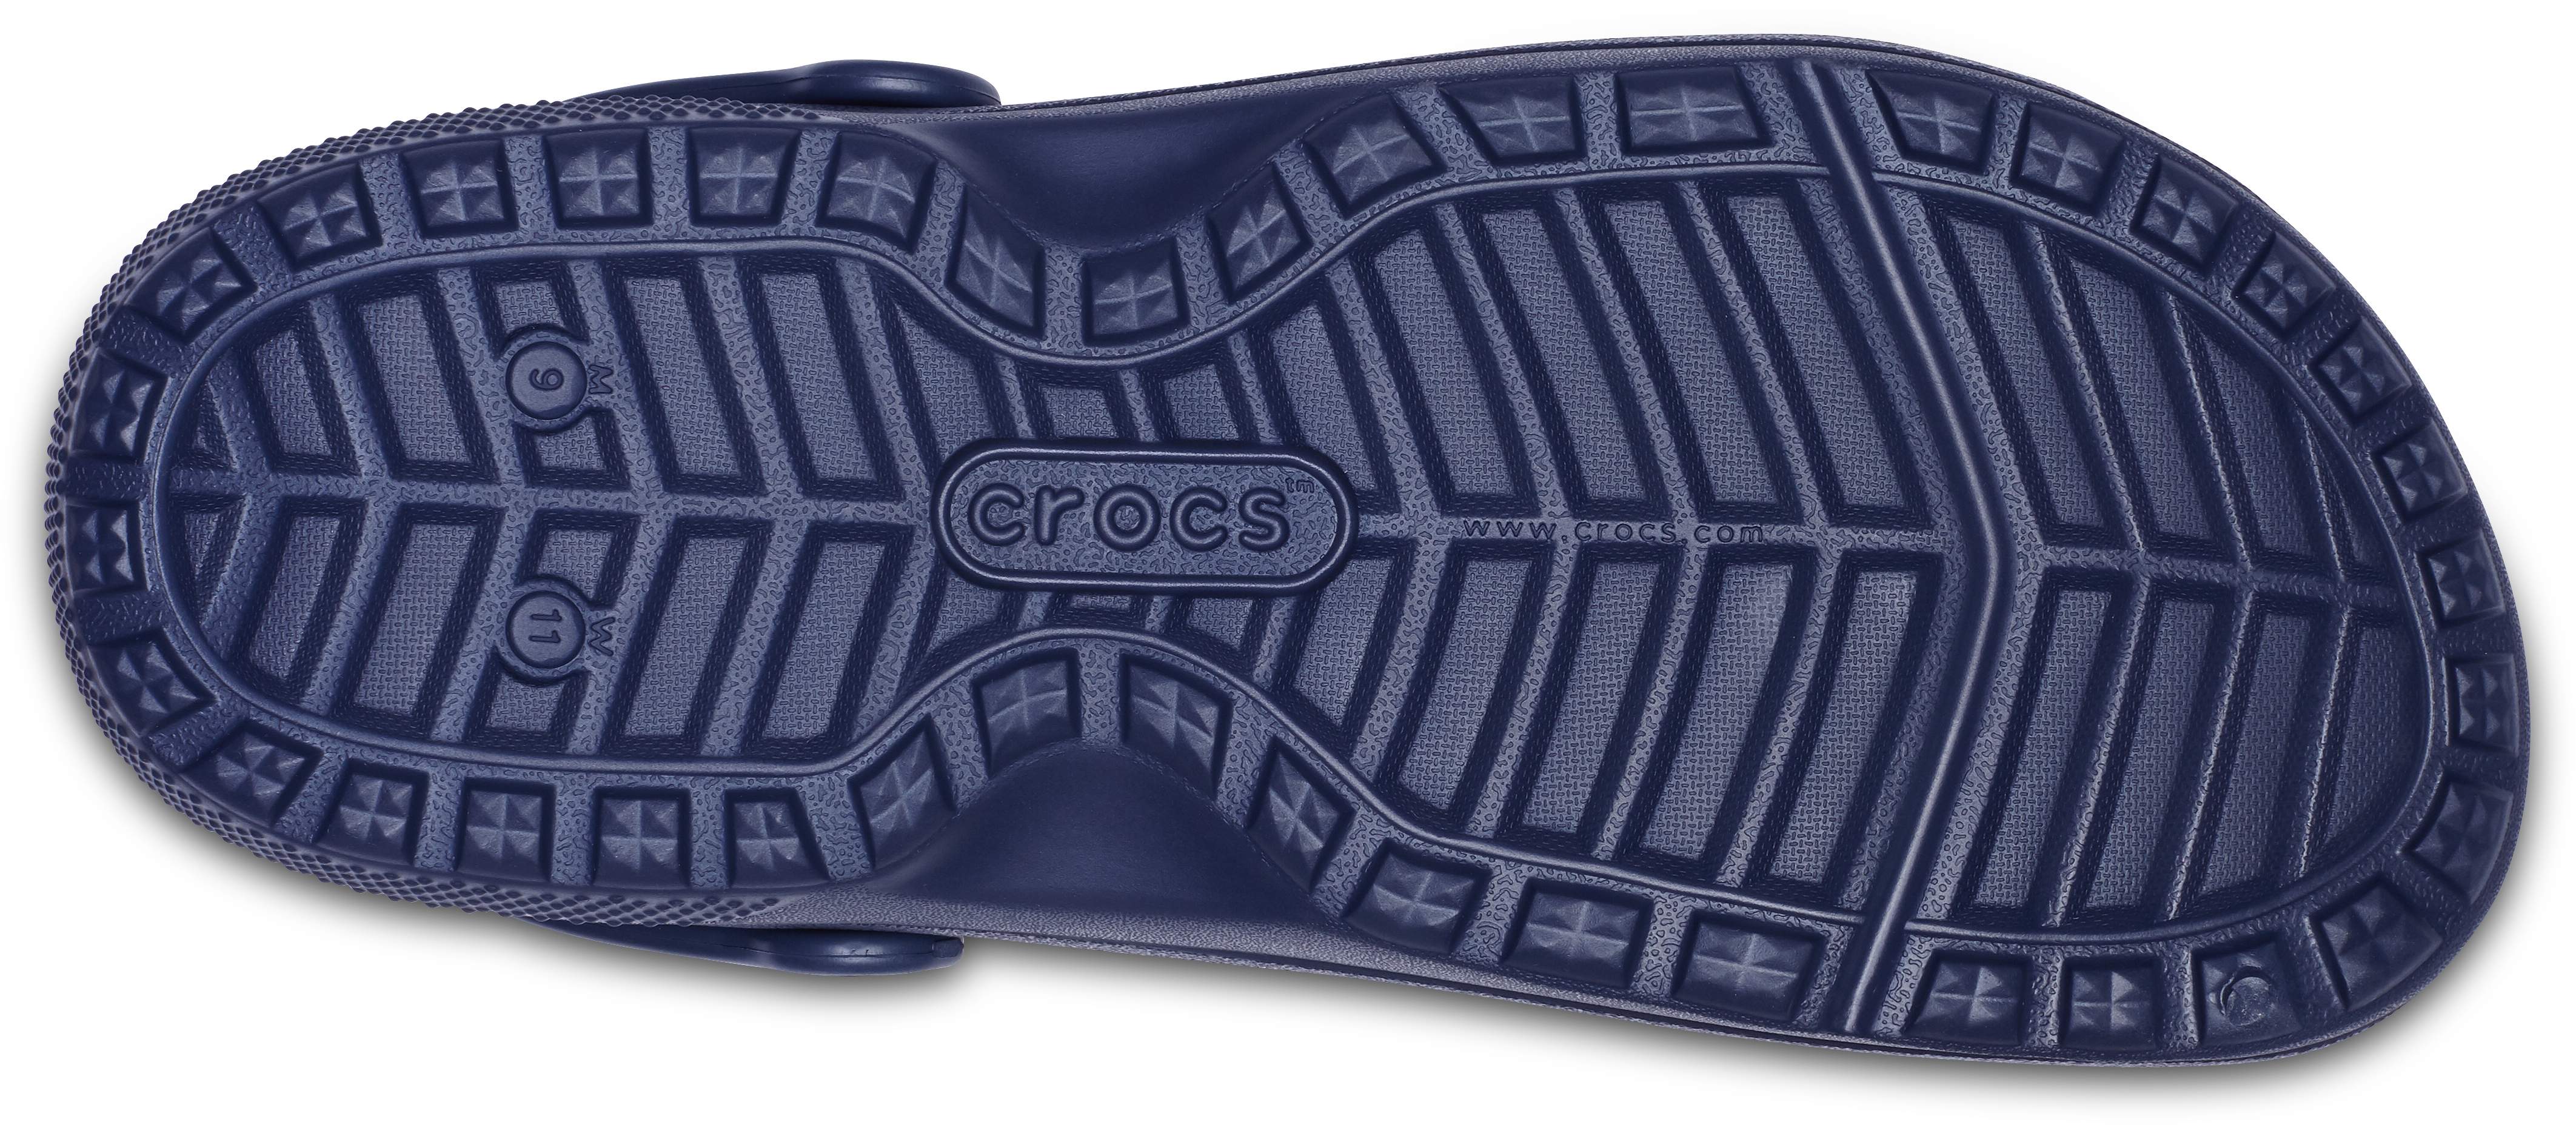 crocs rubber sandals